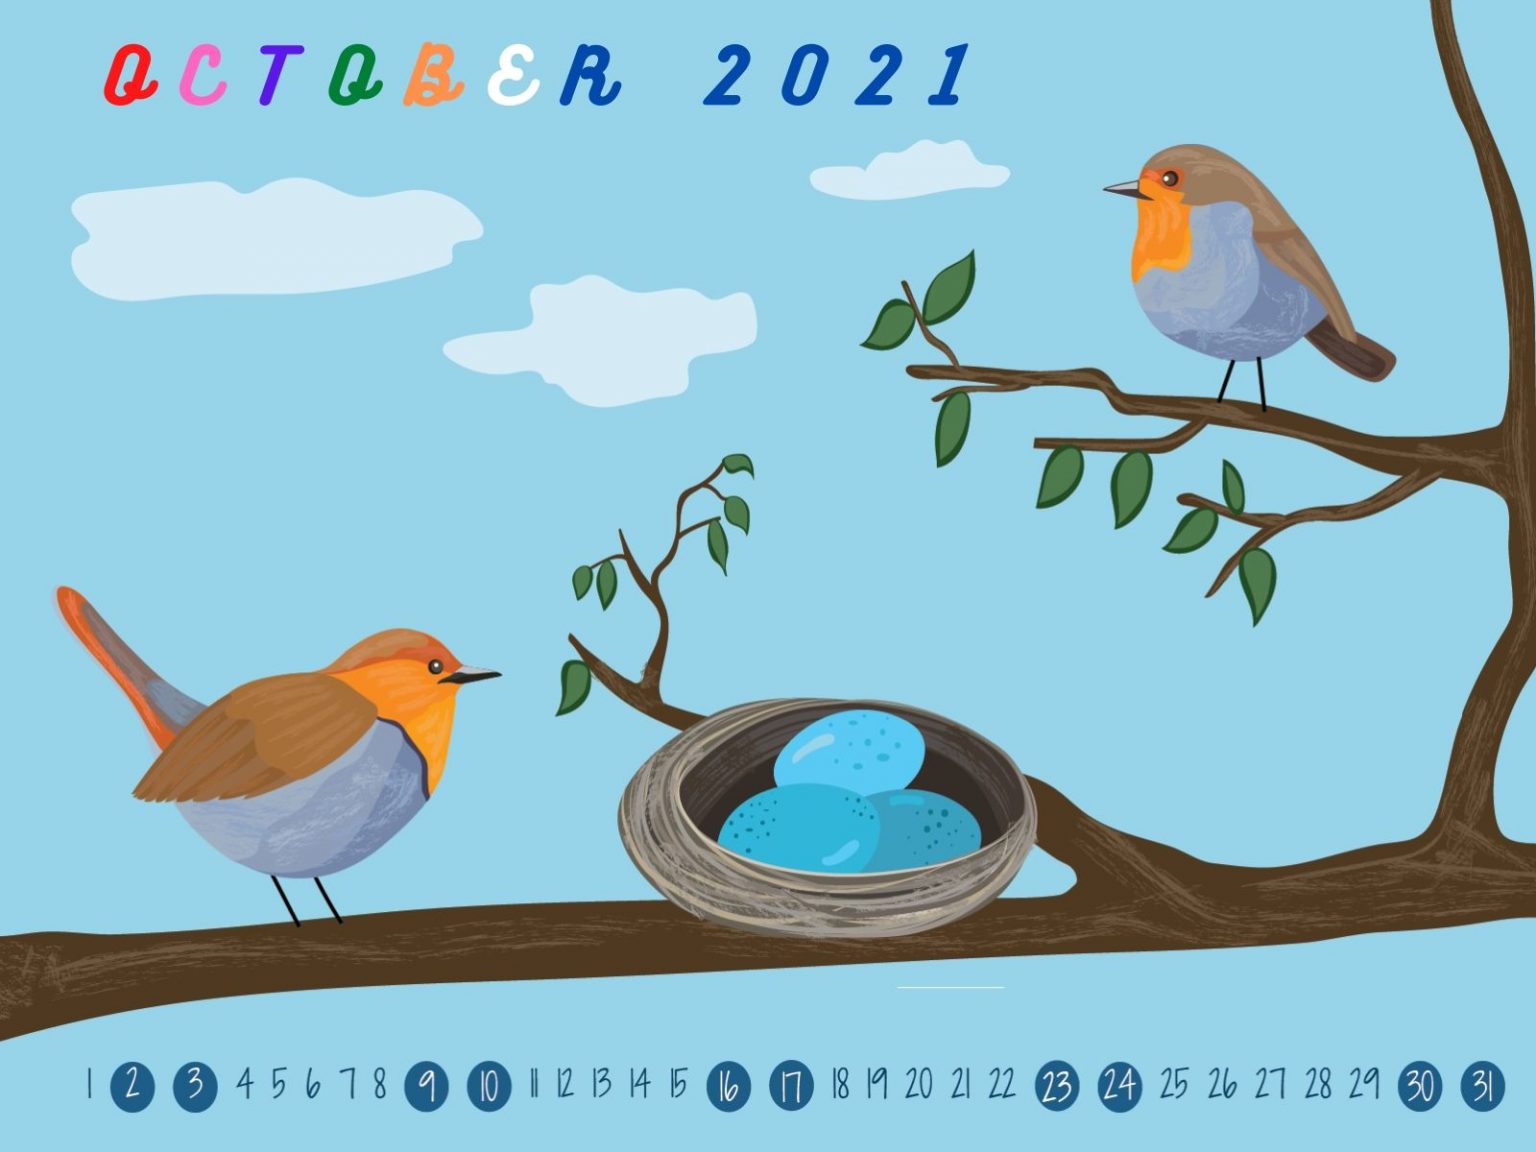 October 2021 Calendar Wallpaper